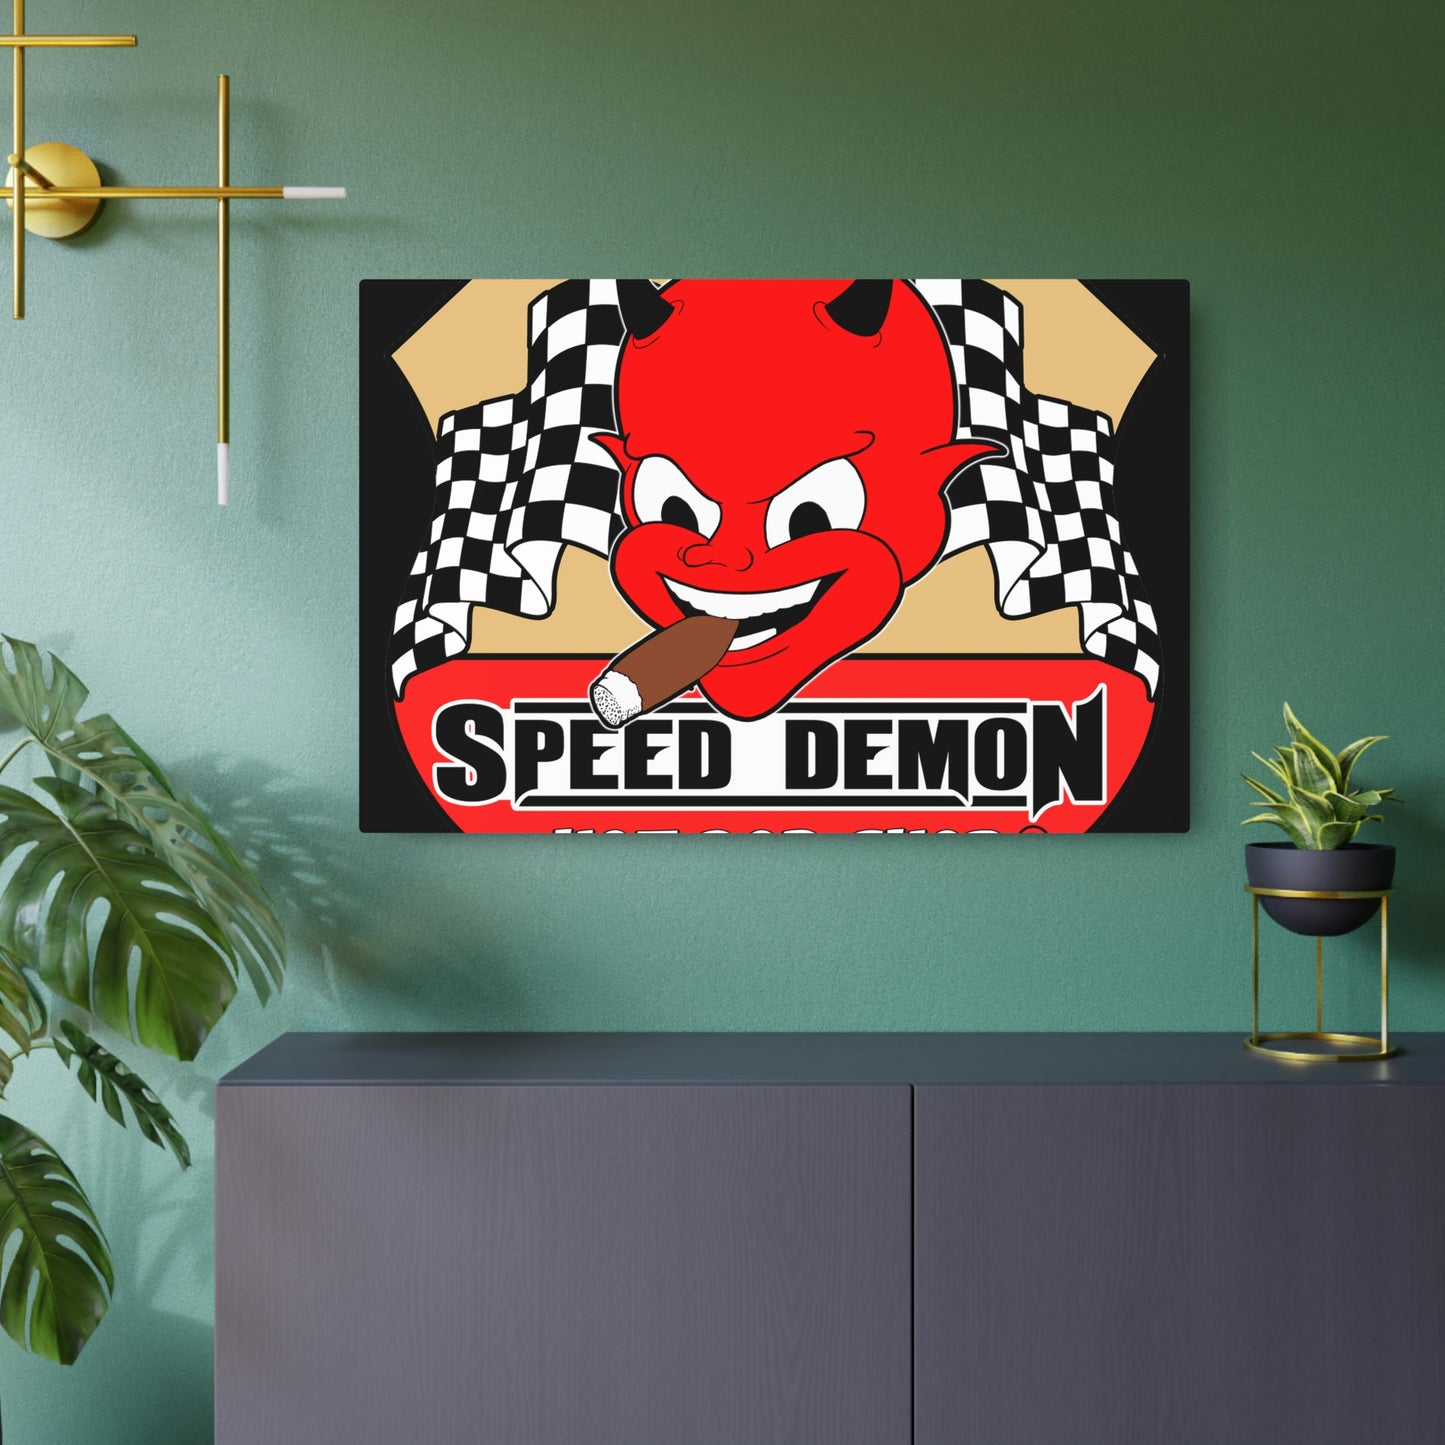 Speed Demon Hot Rod Shop Metal Sign